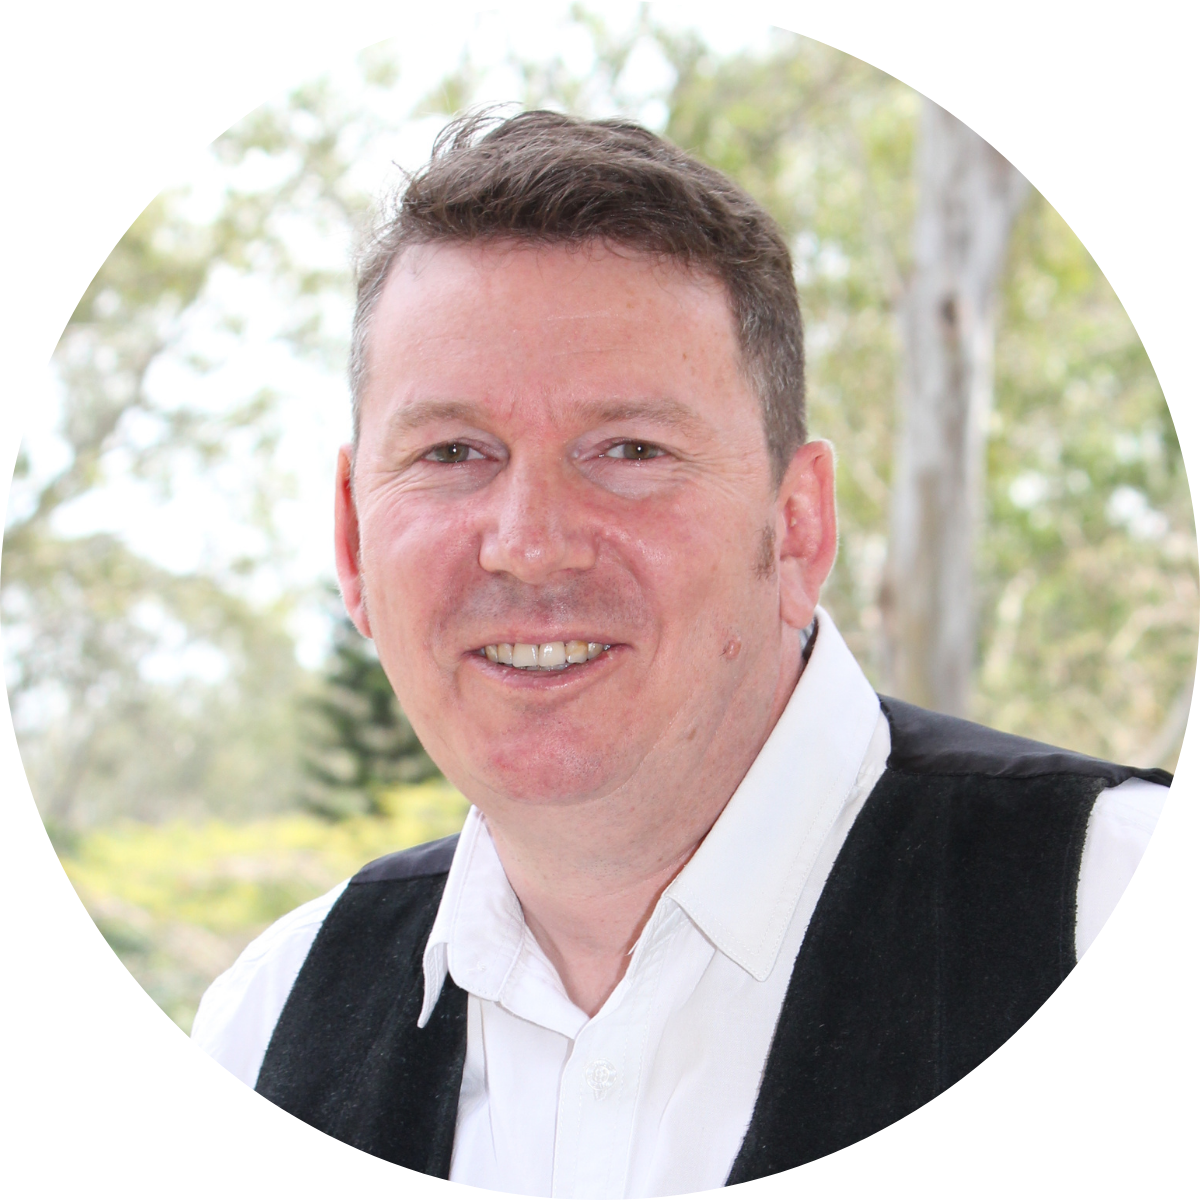 Circle profile image of Australian Greens Policy Coordinator Jason Kennedy.